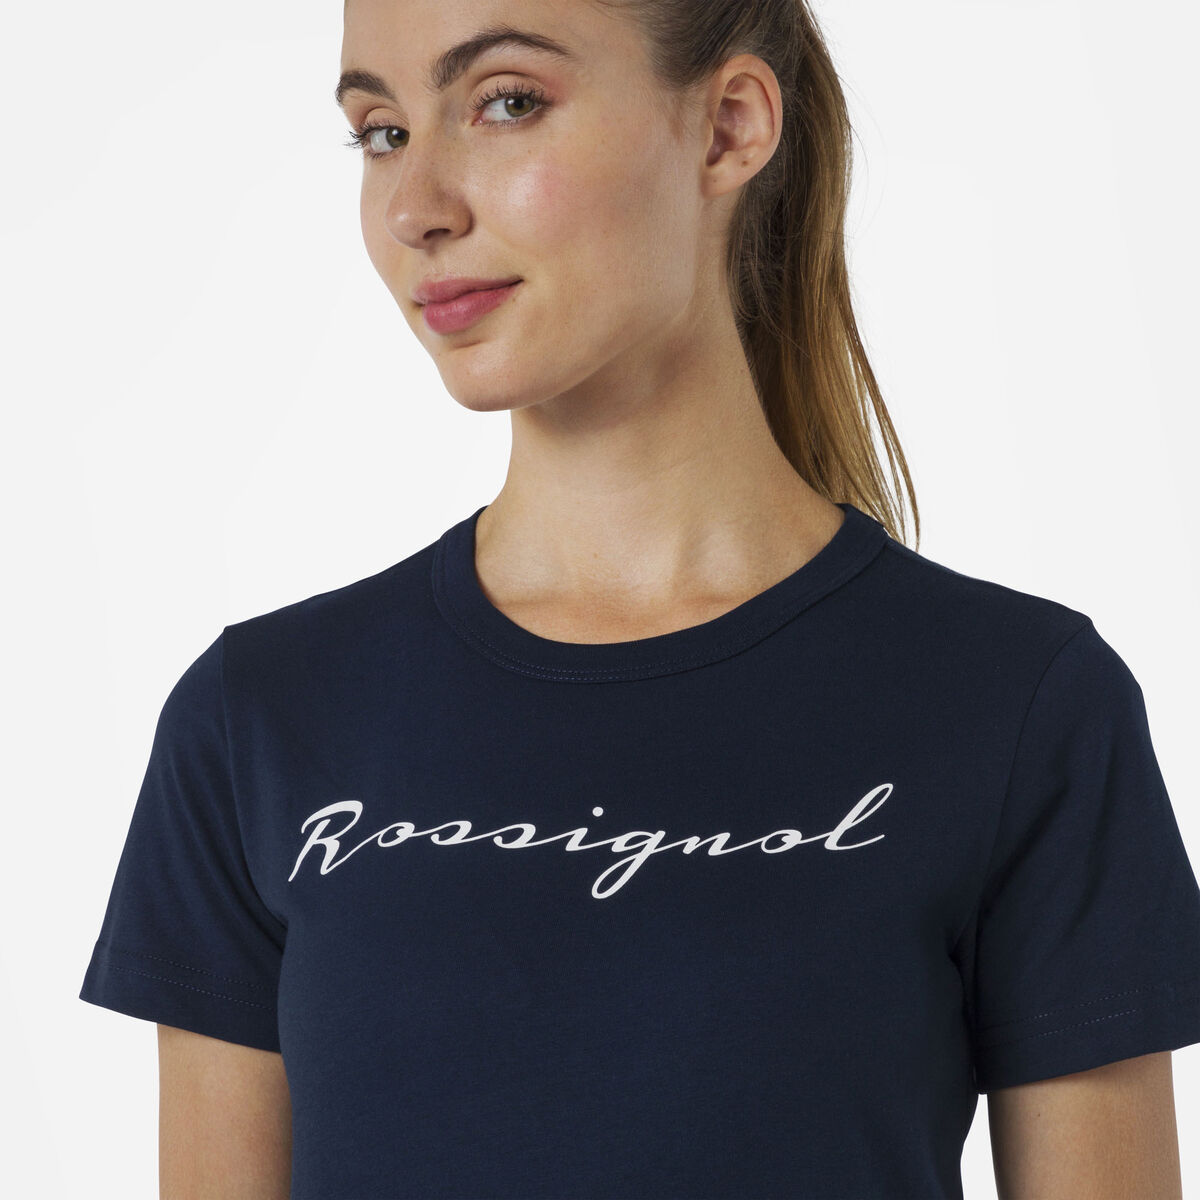 Rossignol Women's logo tee blue